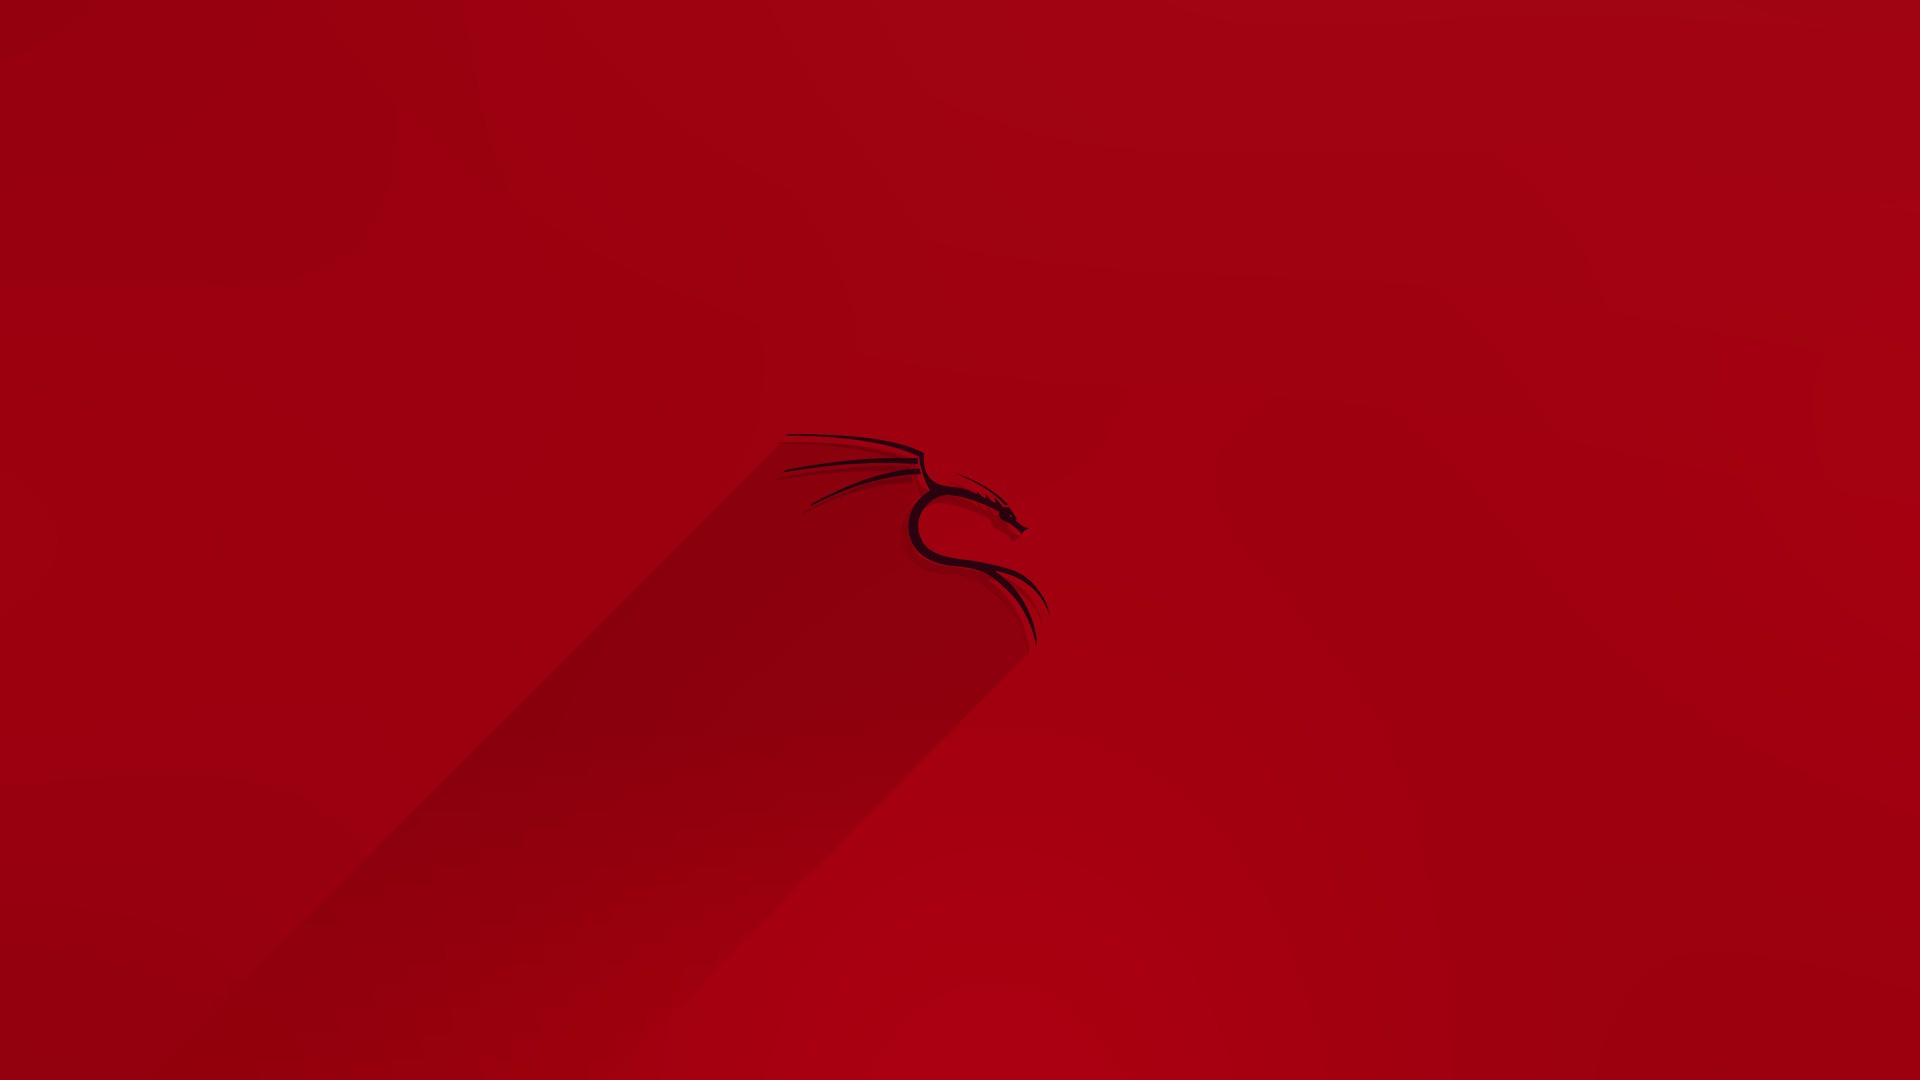 Kali Kali Linux Red Linux Wallpapers Hd Desktop And Mobile Backgrounds